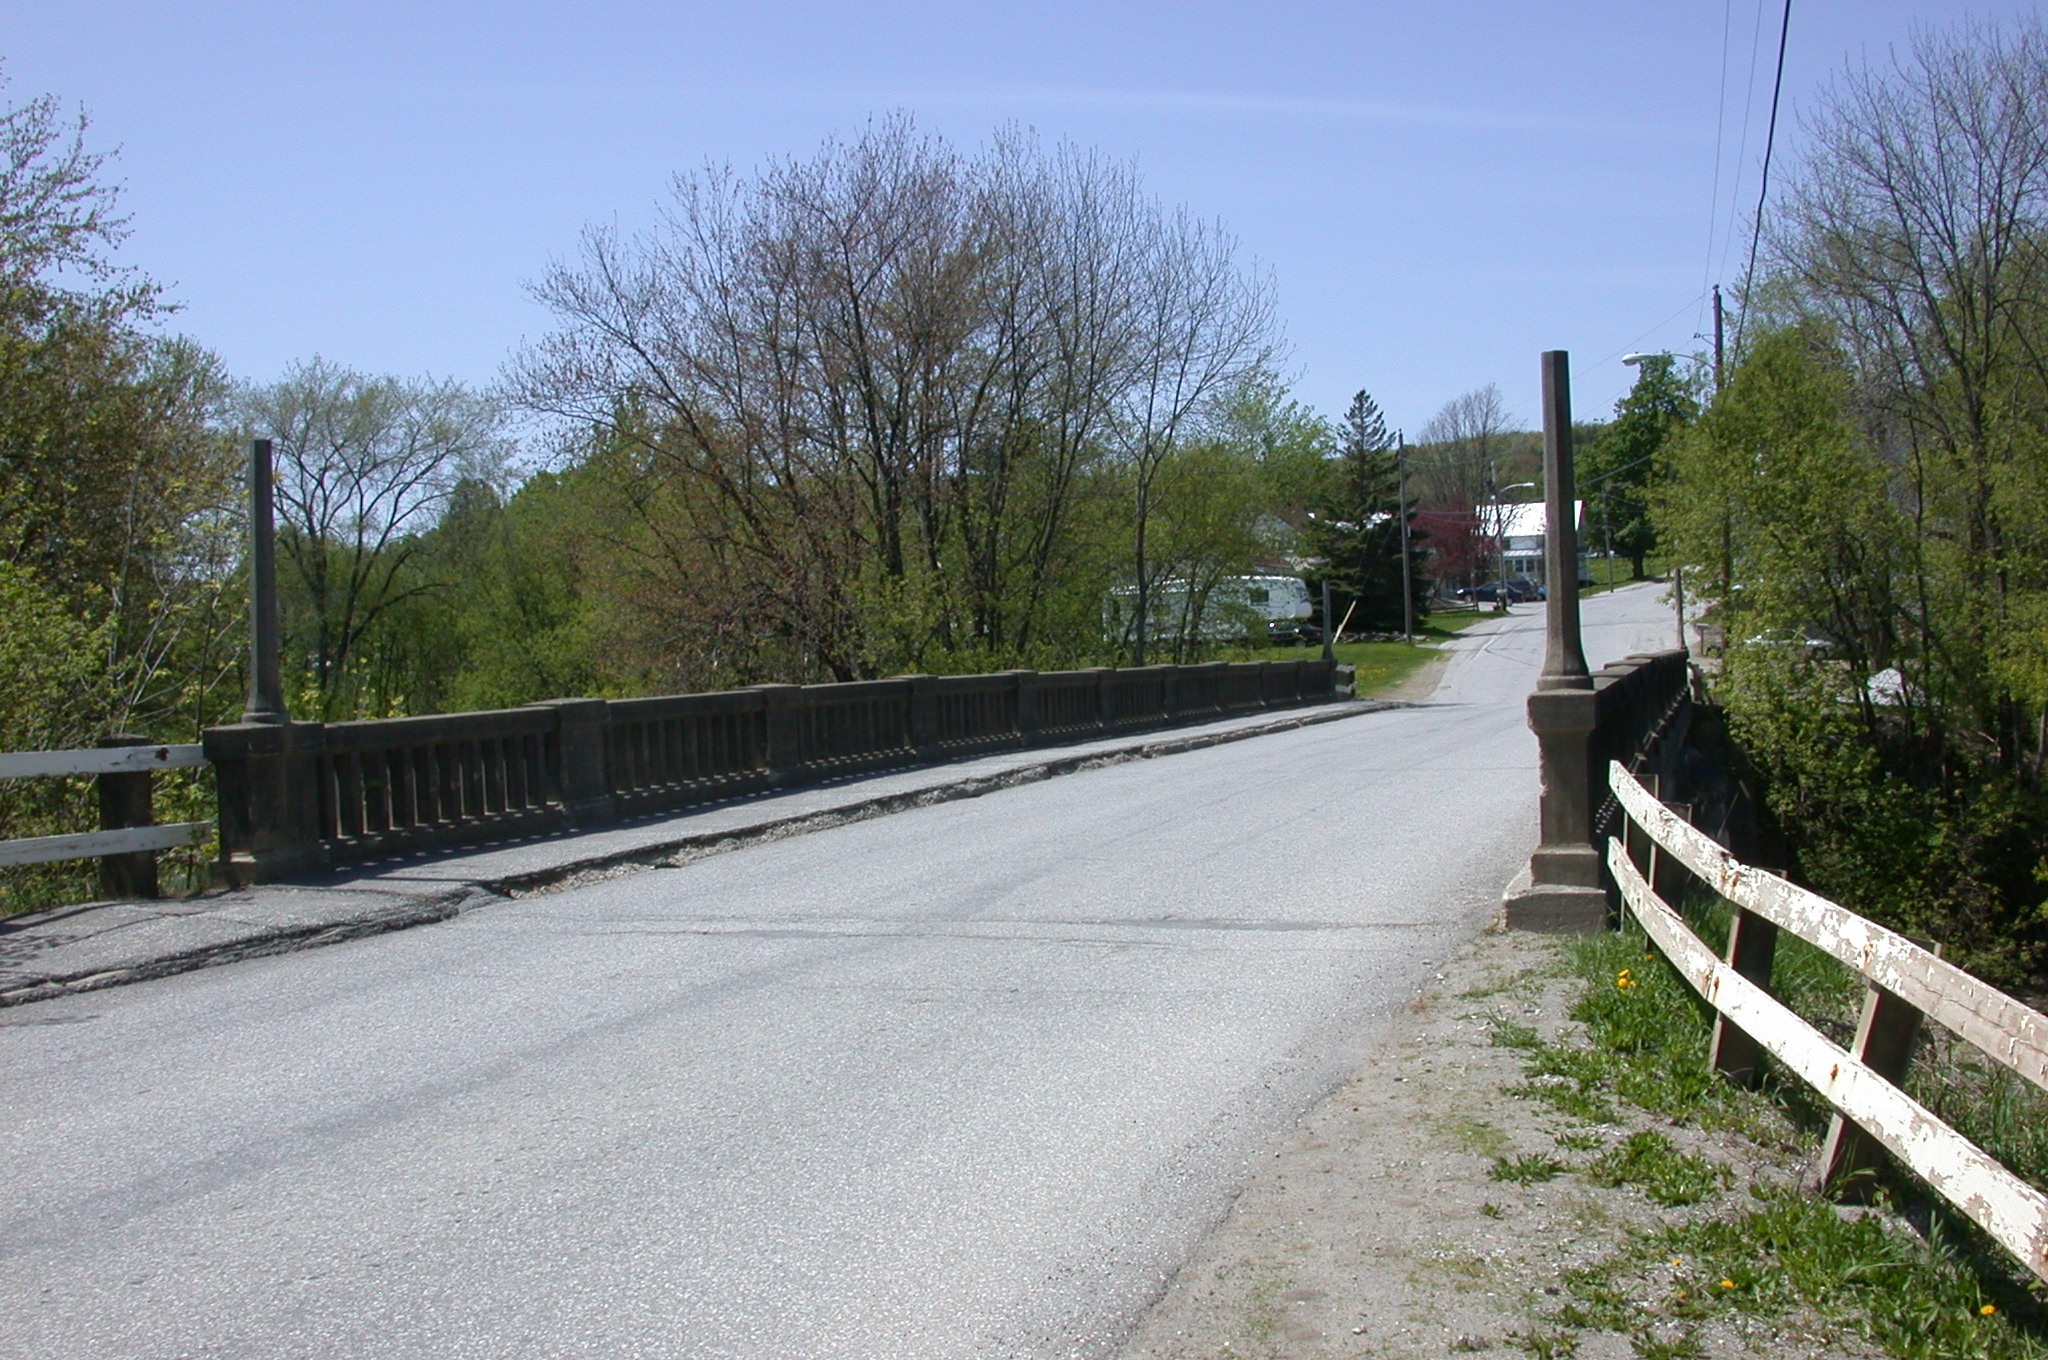 Site of Sheldon Covered Bridge